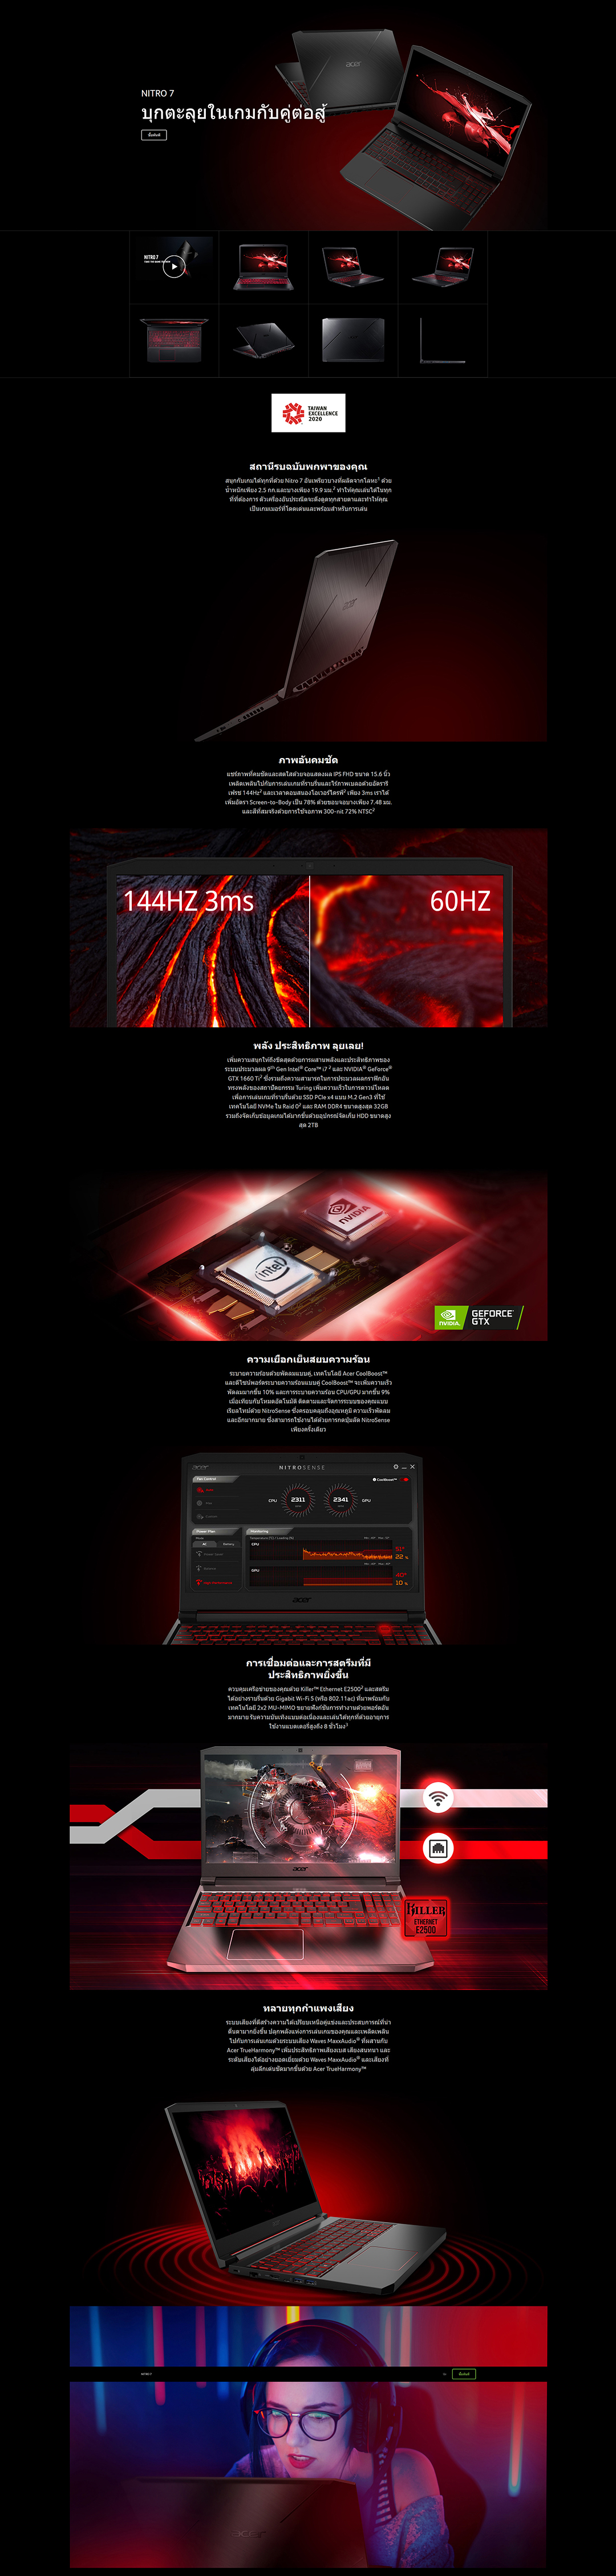 screenshot 2020 01 30 nitro 7 Acer Nitro 7 AN715 51 53UV Intel Core i5 9300H VGA GTX 1650 144Hz IPS Review